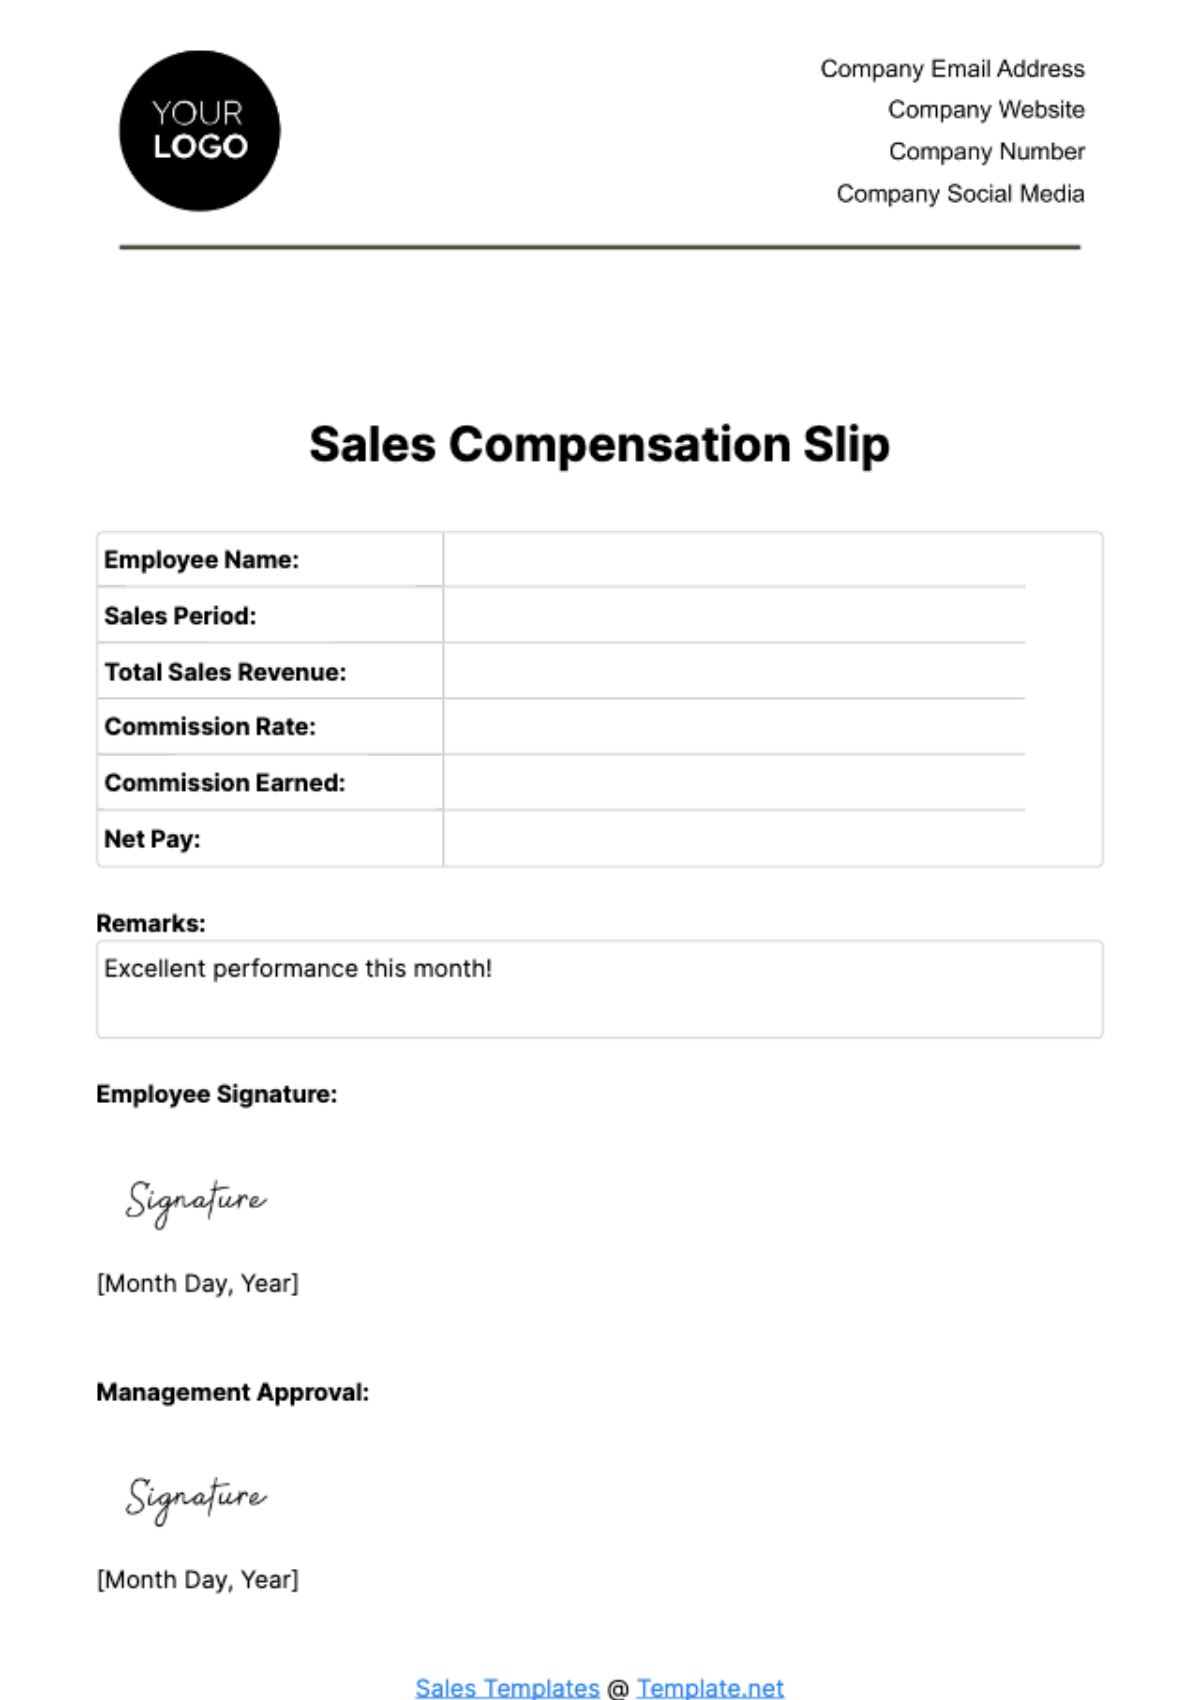 Sales Compensation Slip Template